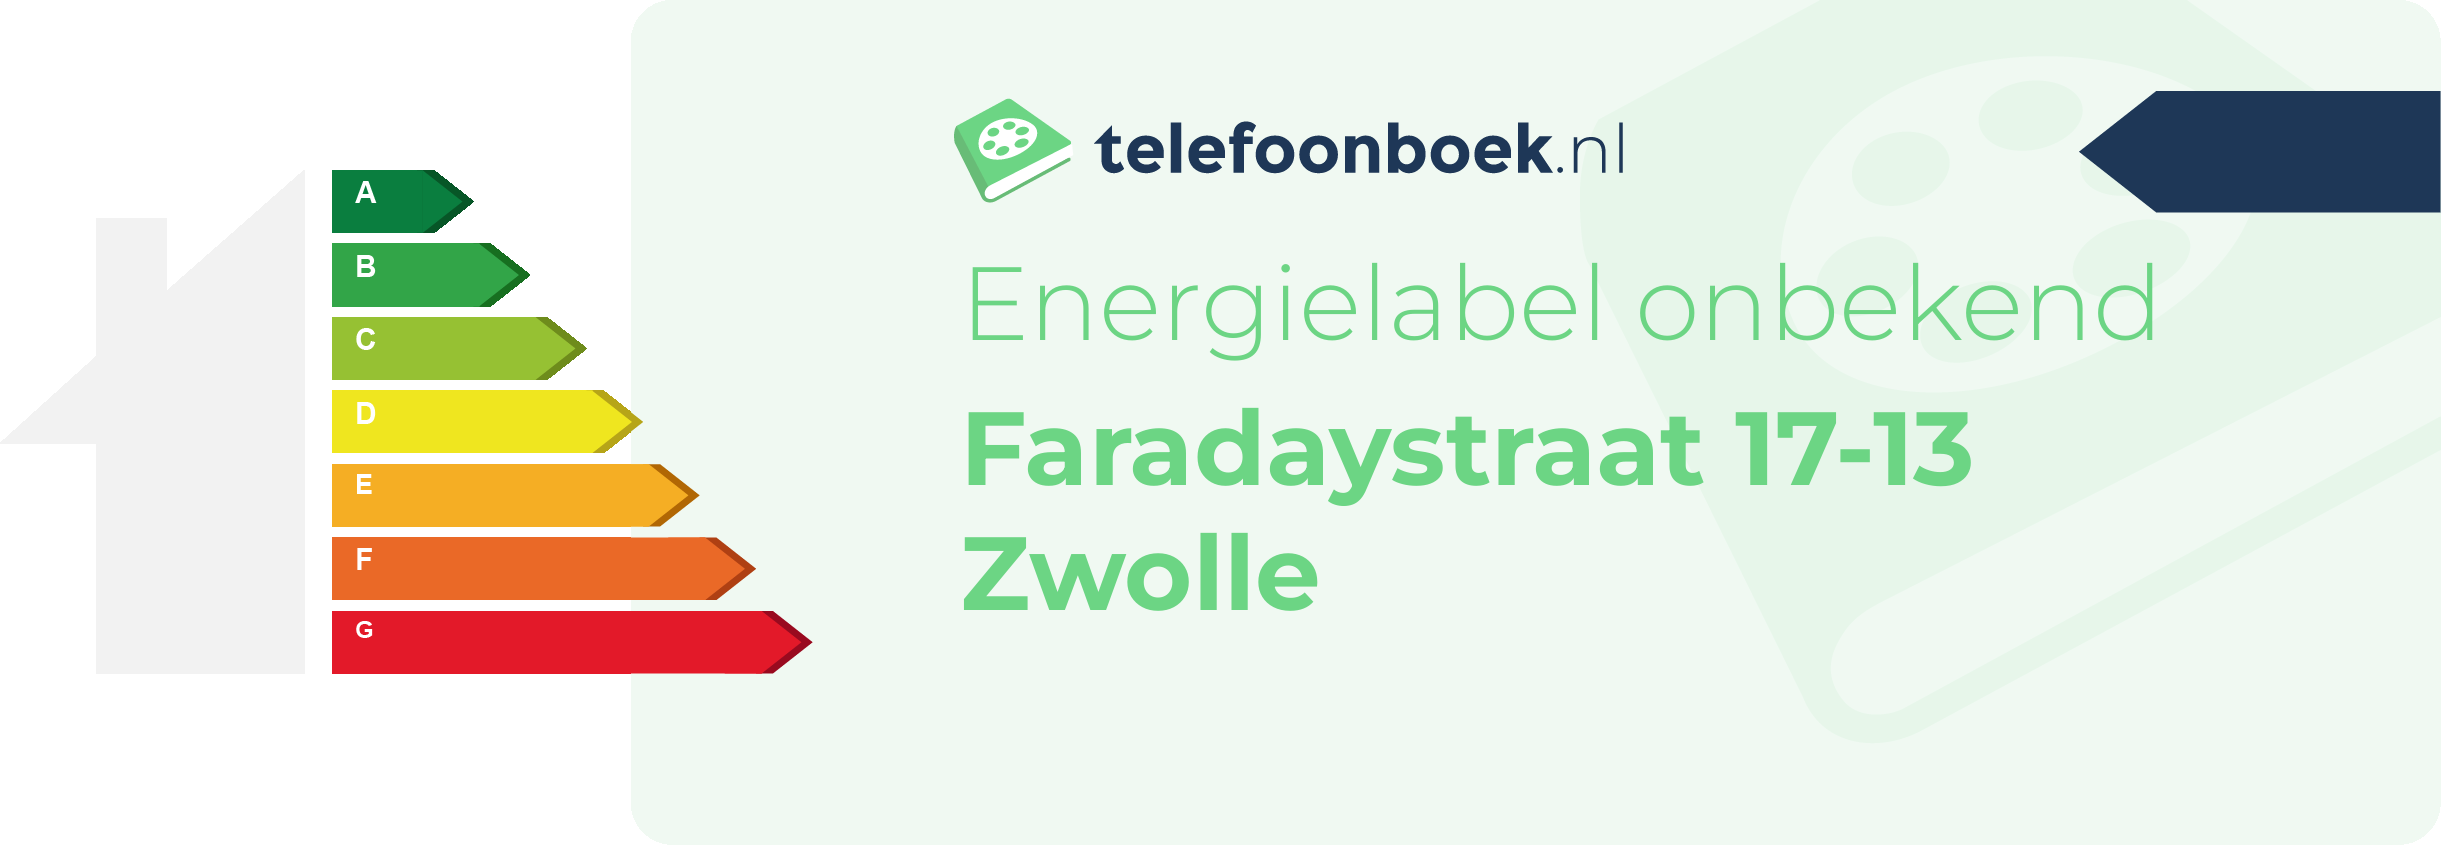 Energielabel Faradaystraat 17-13 Zwolle